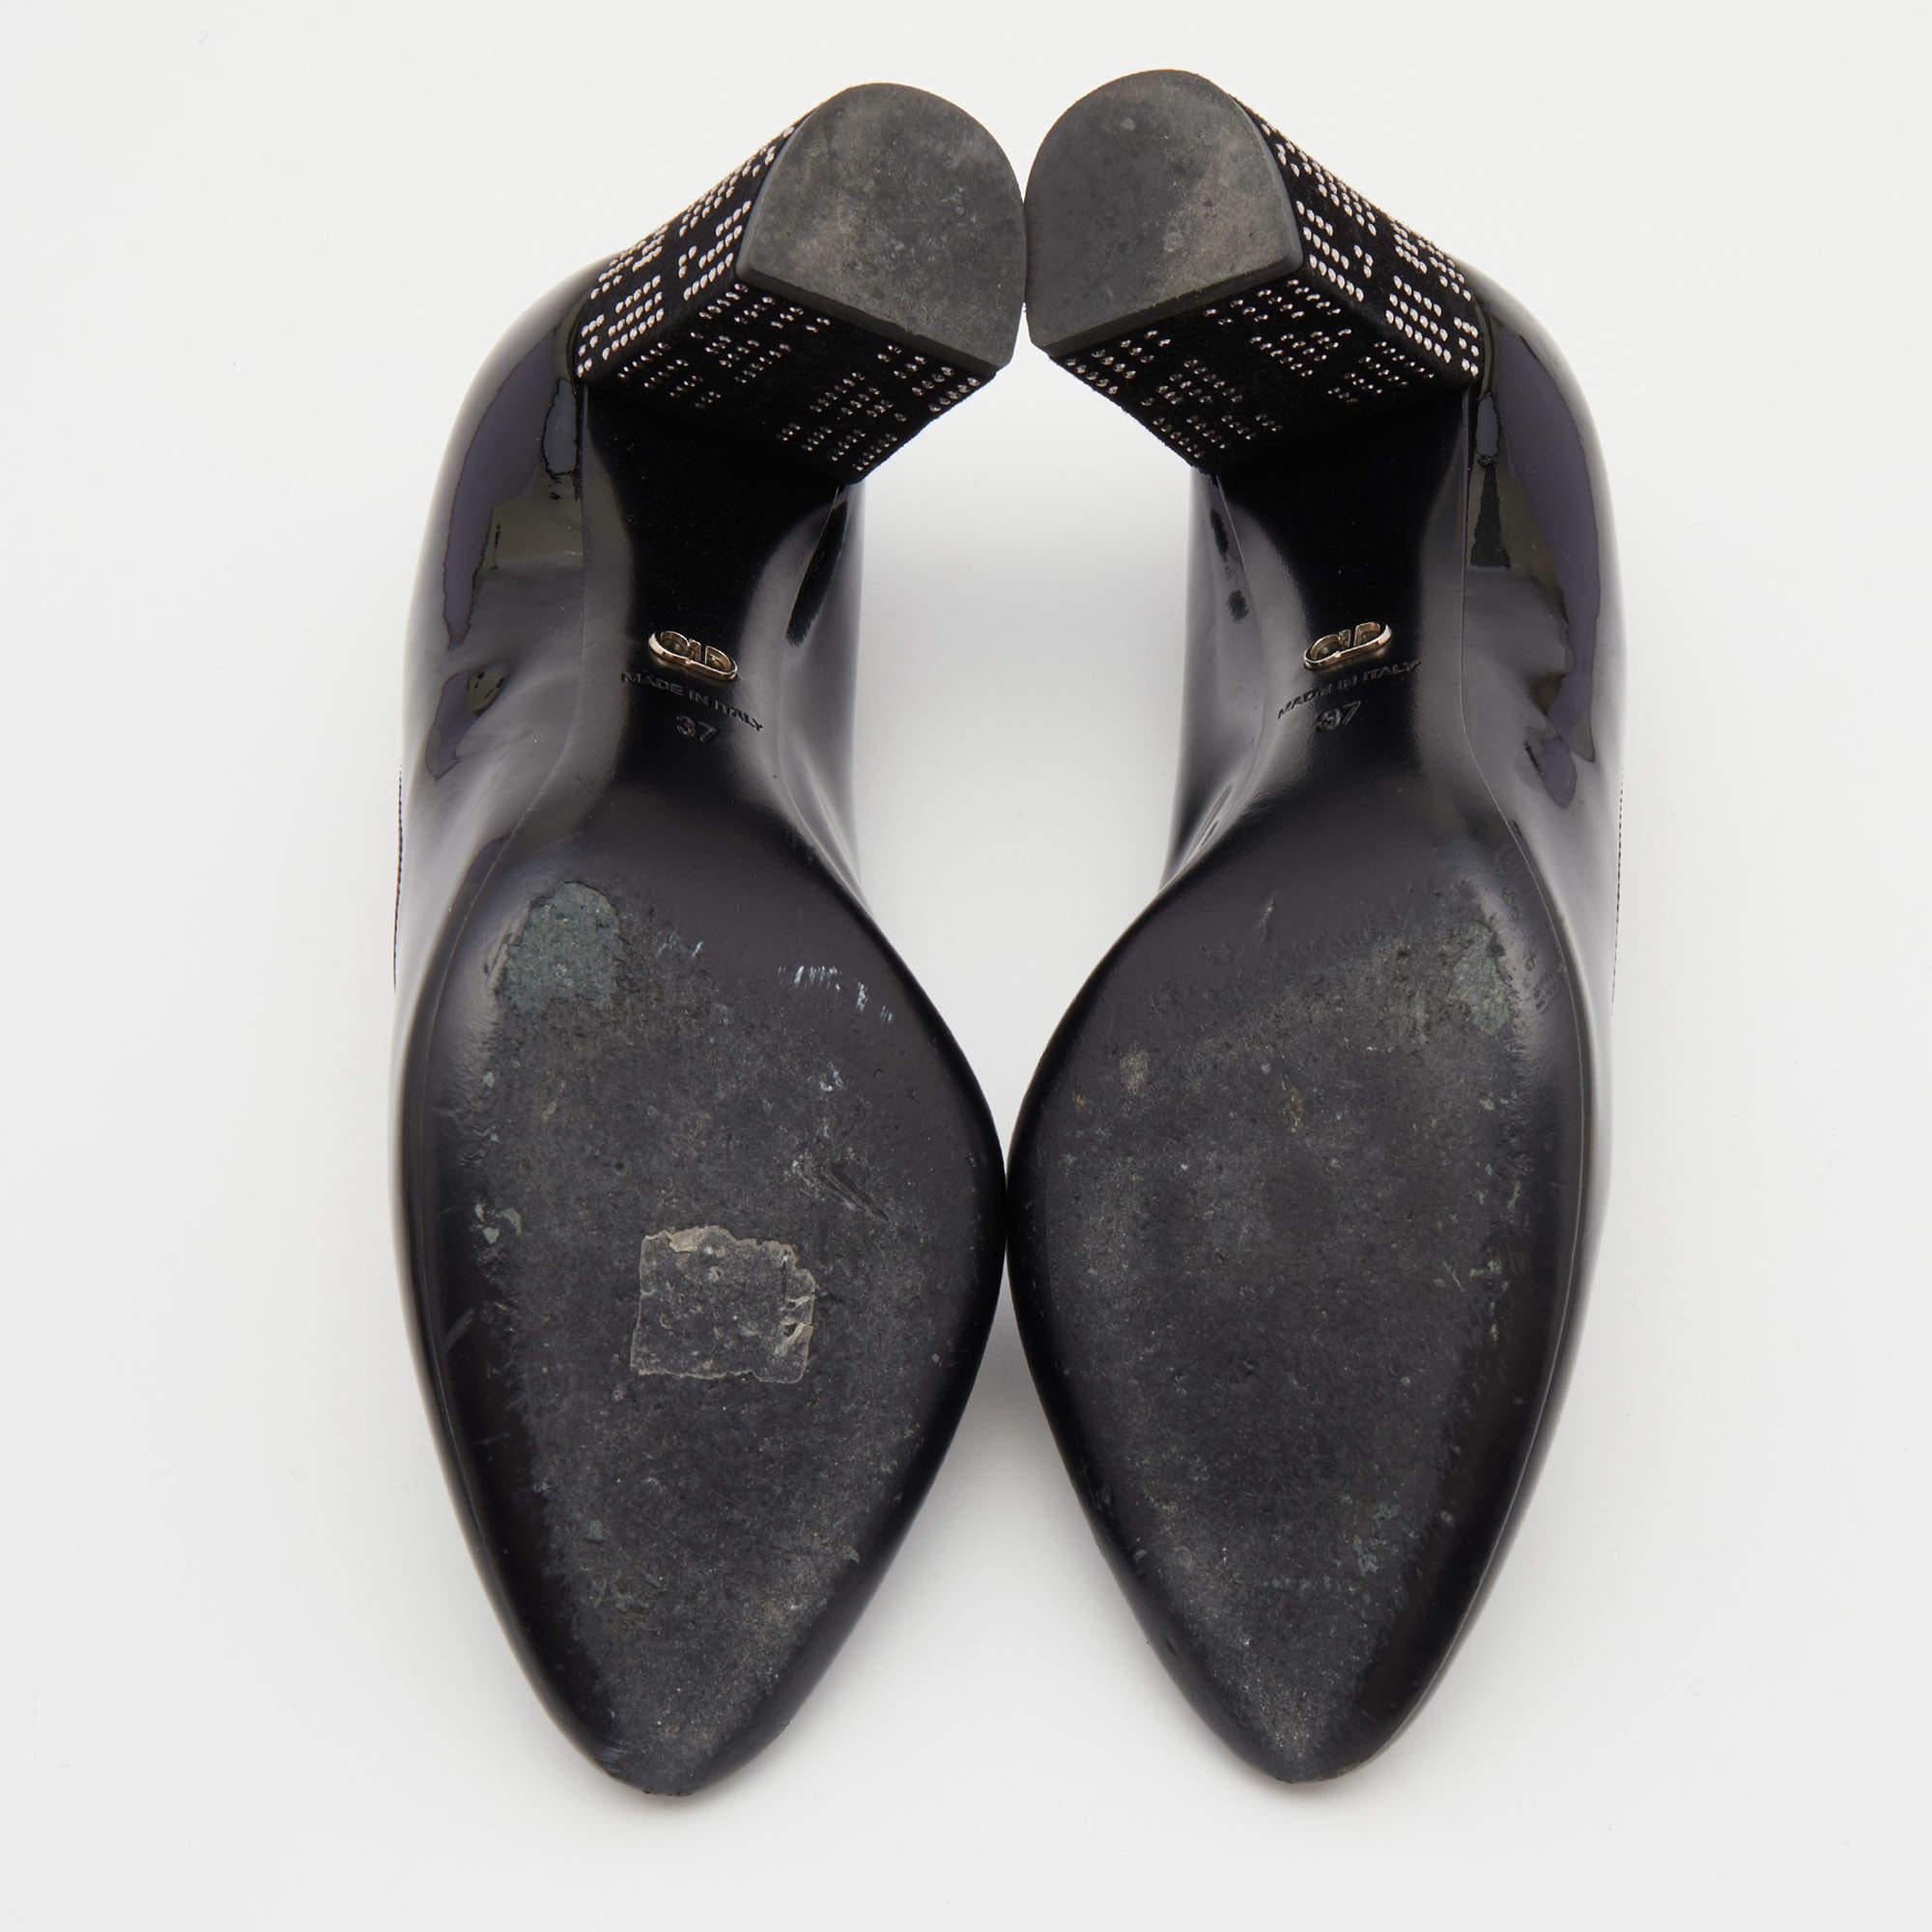 Dior Black Patent Leather Studded Block Heel Pumps Size 37 2